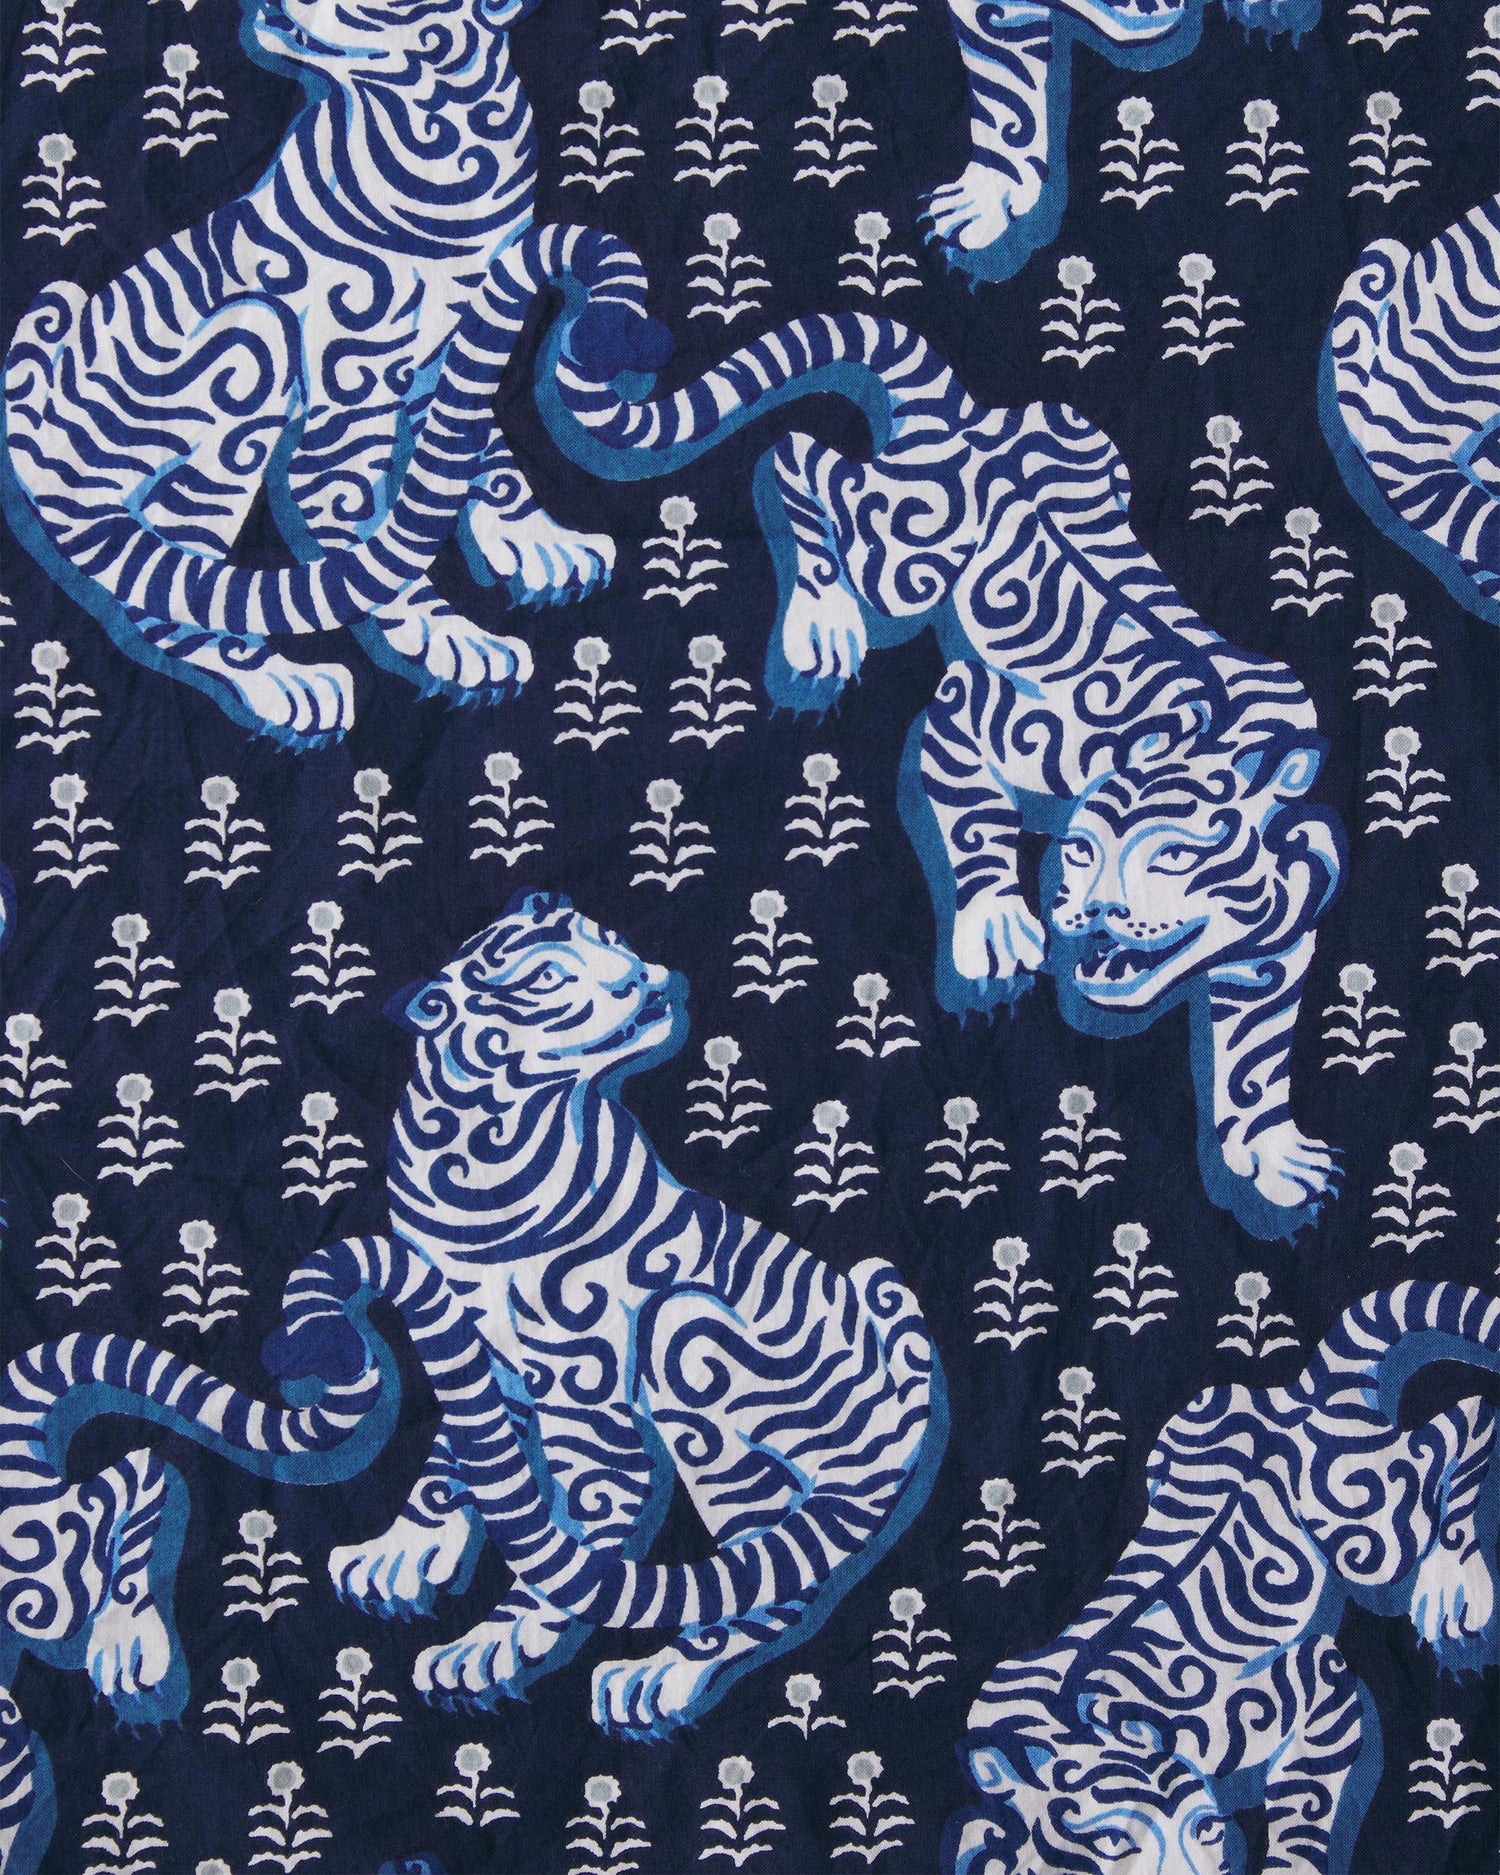 Tiger Queen - Petite Pajama Pants - Navy - Printfresh